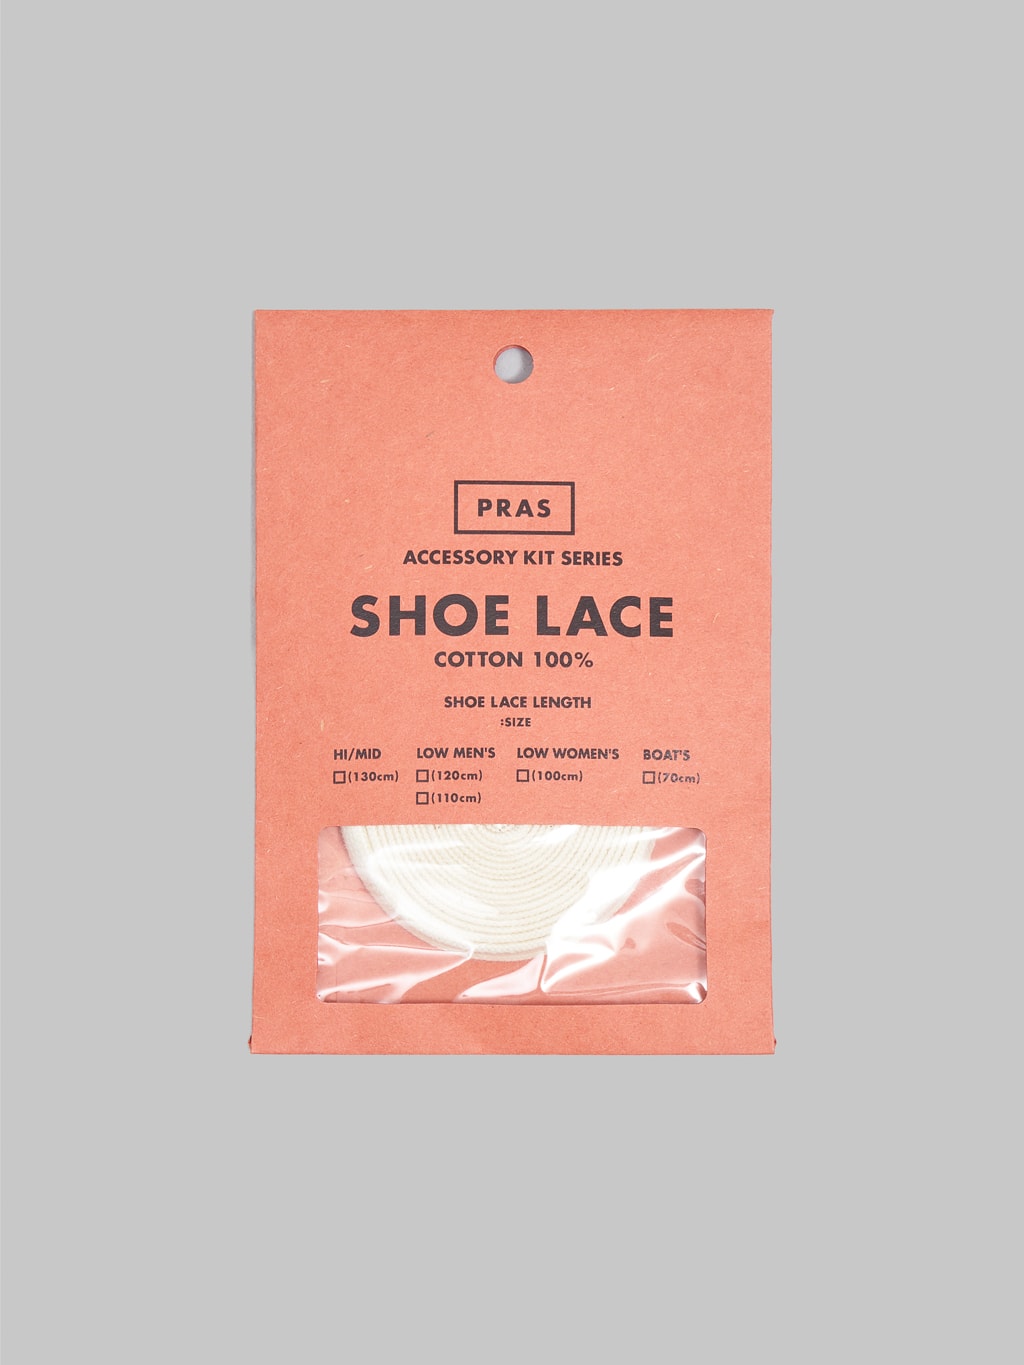 pras shoe lace kinari packaging front view